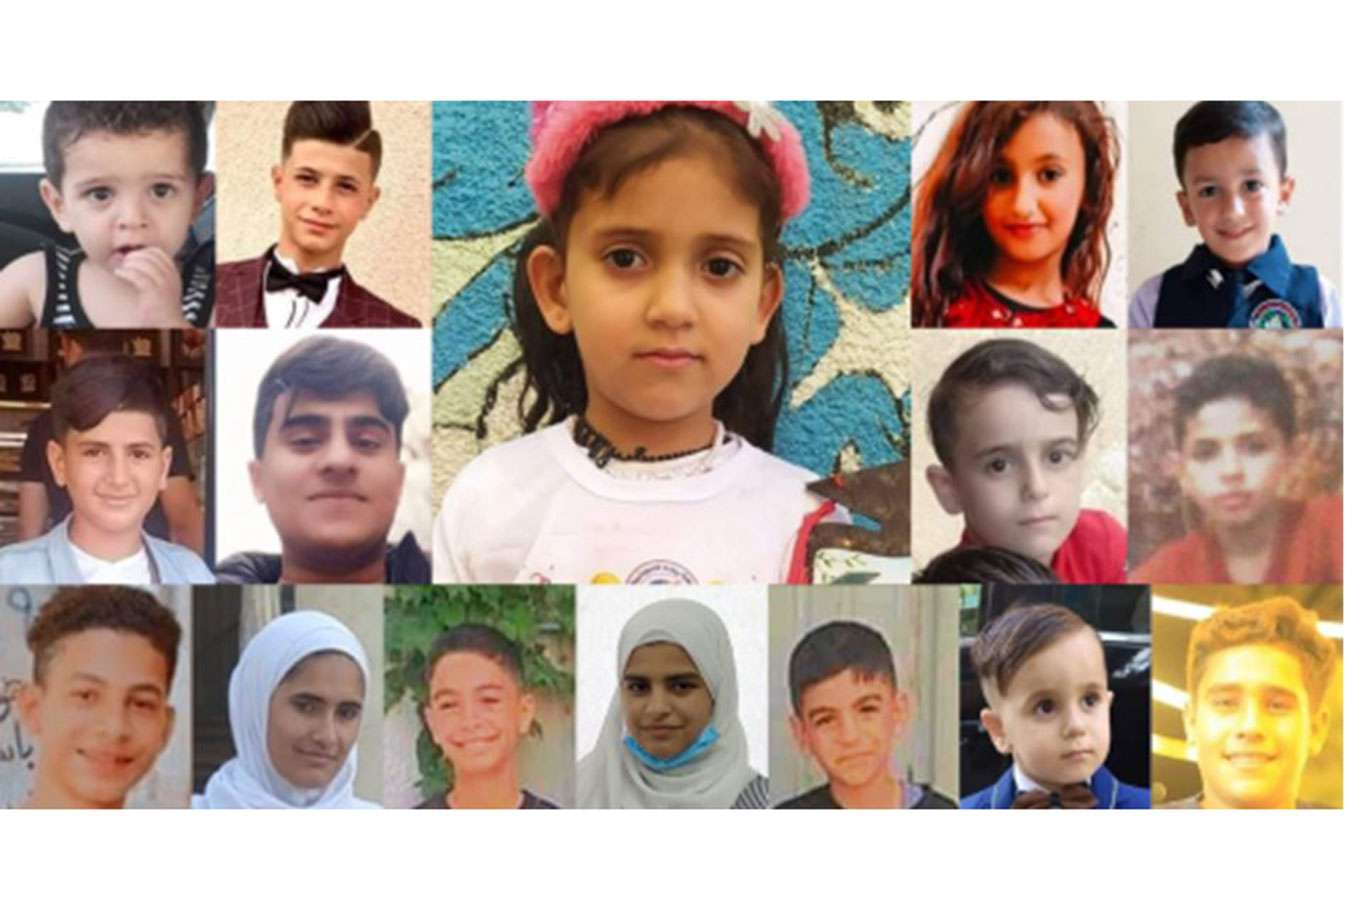 UN rights chief: Killing of Palestinian children ‘unconscionable’